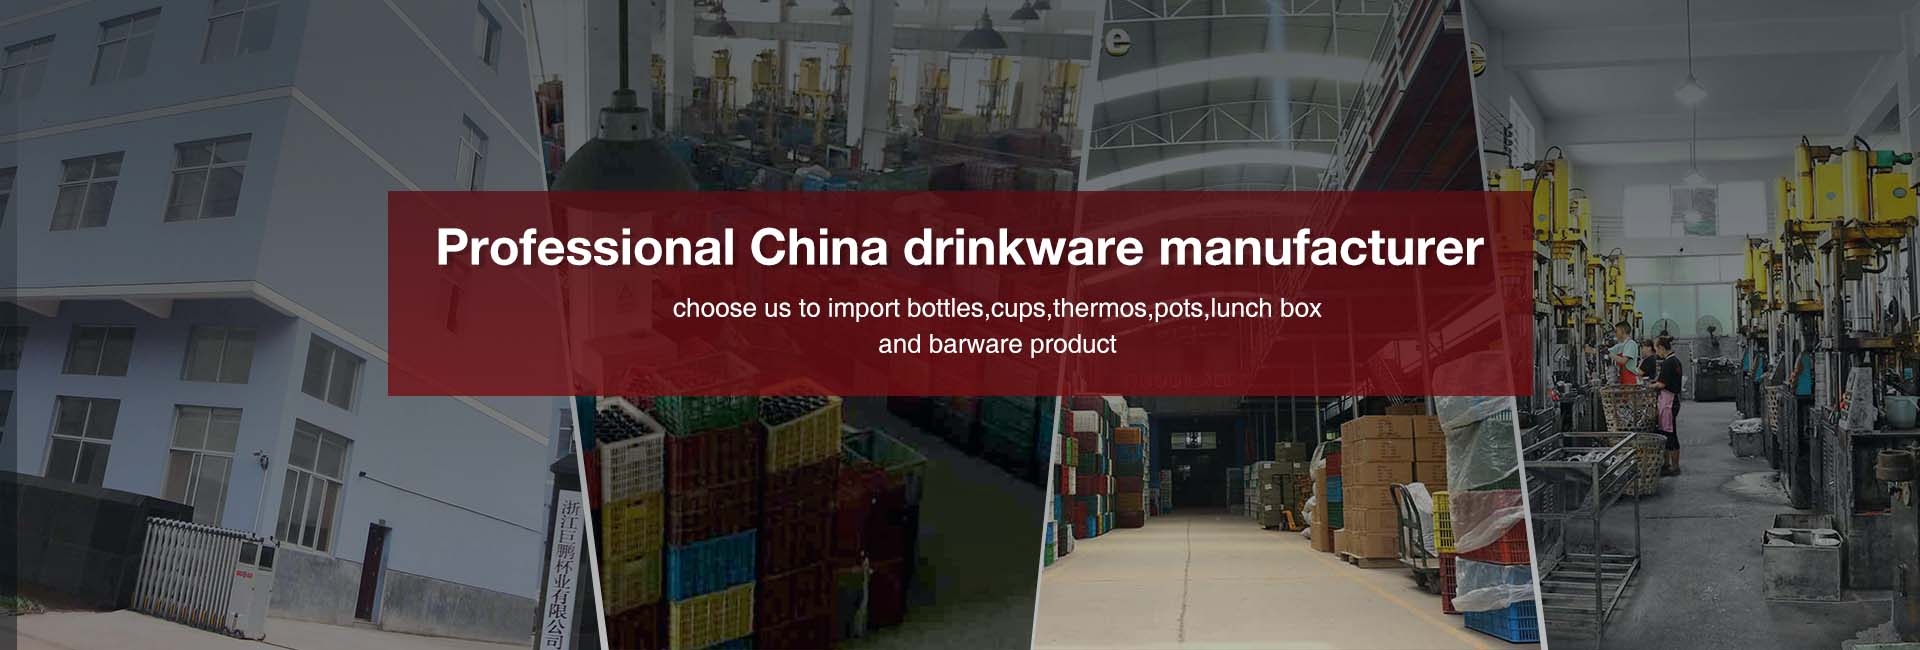 Professional China drinkware manufacturer